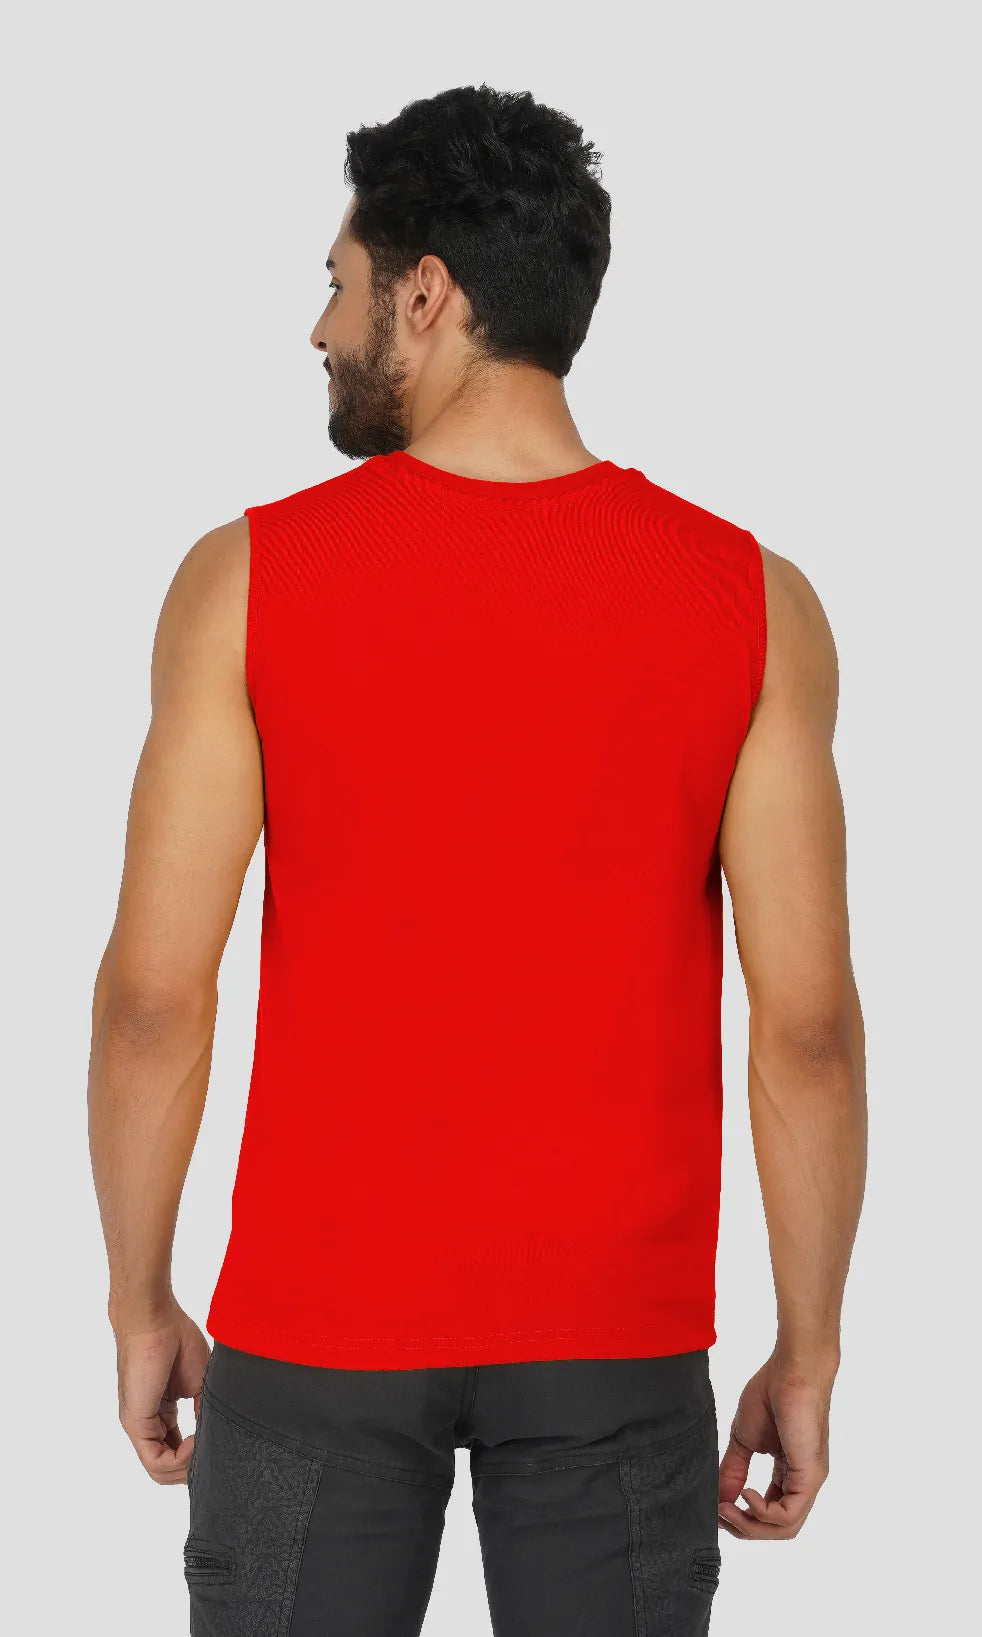 Mebadass Cotton Men's Sleeveless Regular Size Vests - Red